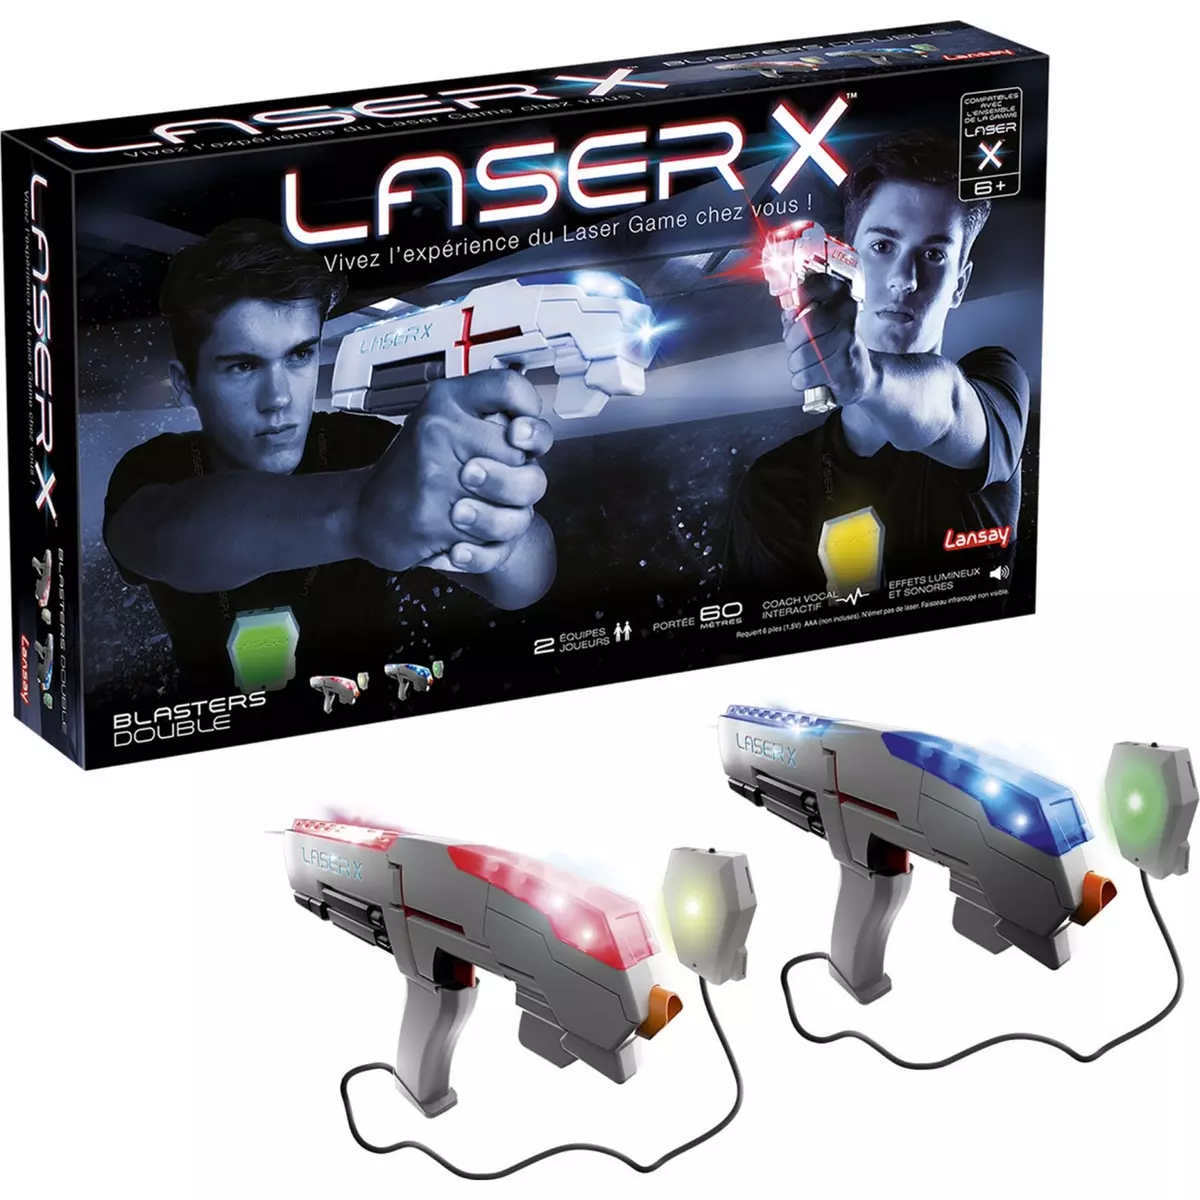 LANSAY Laser X Double 